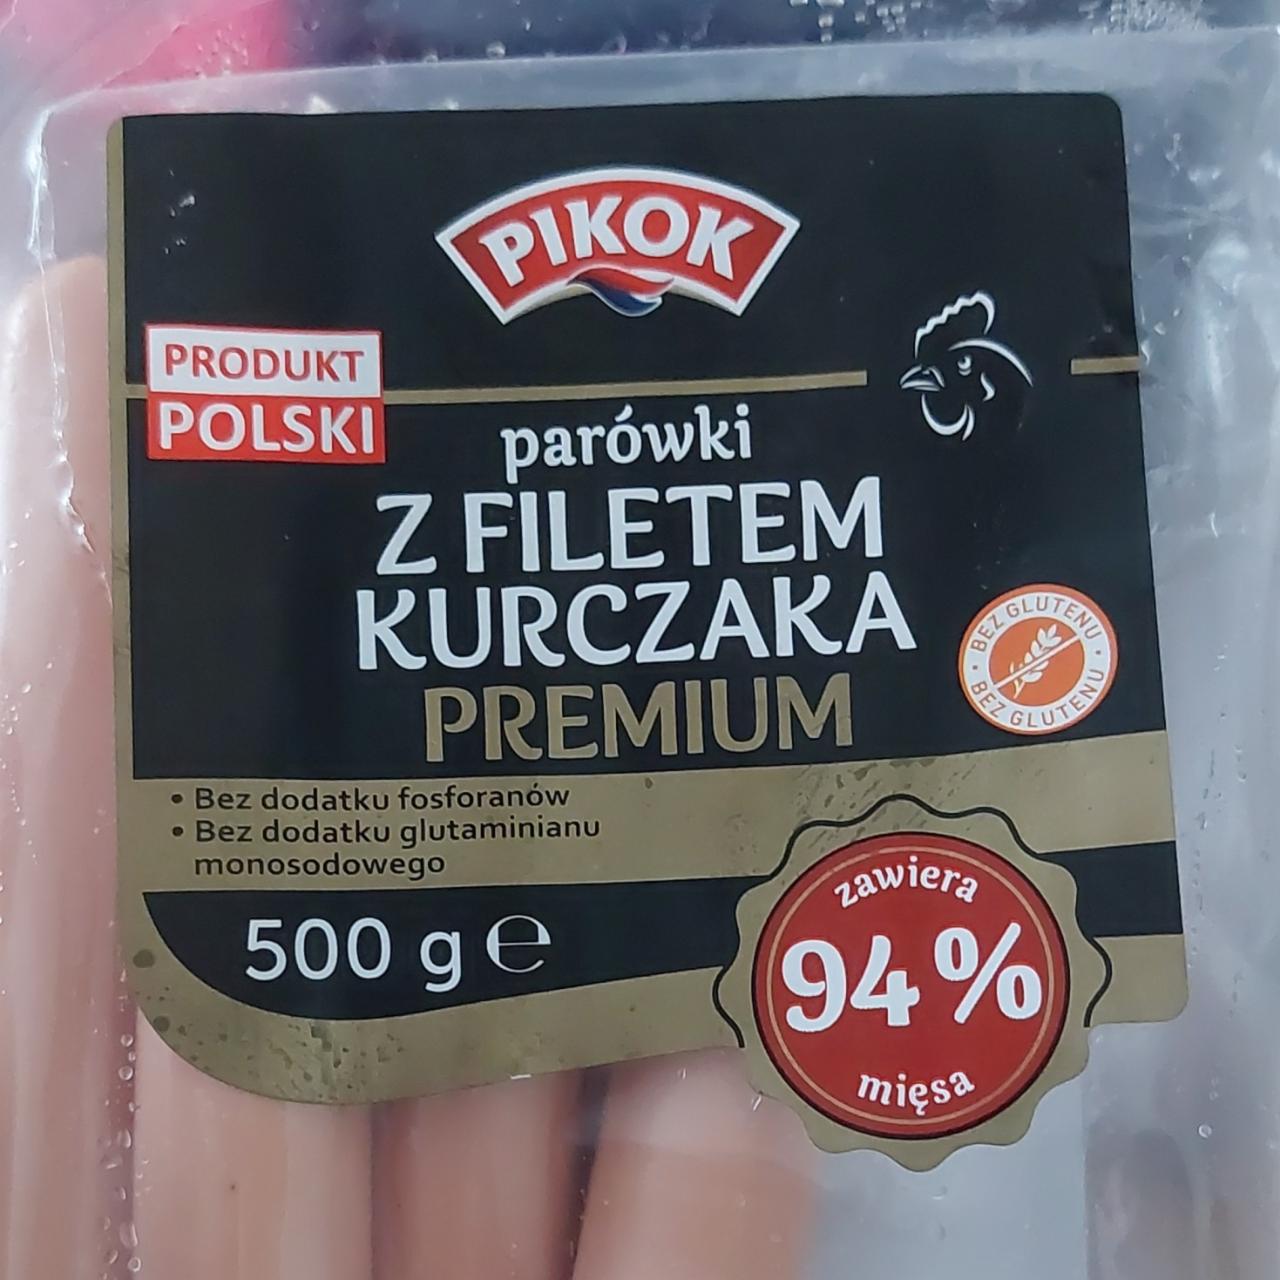 Fotografie - Parówki z filetem kurczaka Premium 94% Pikok